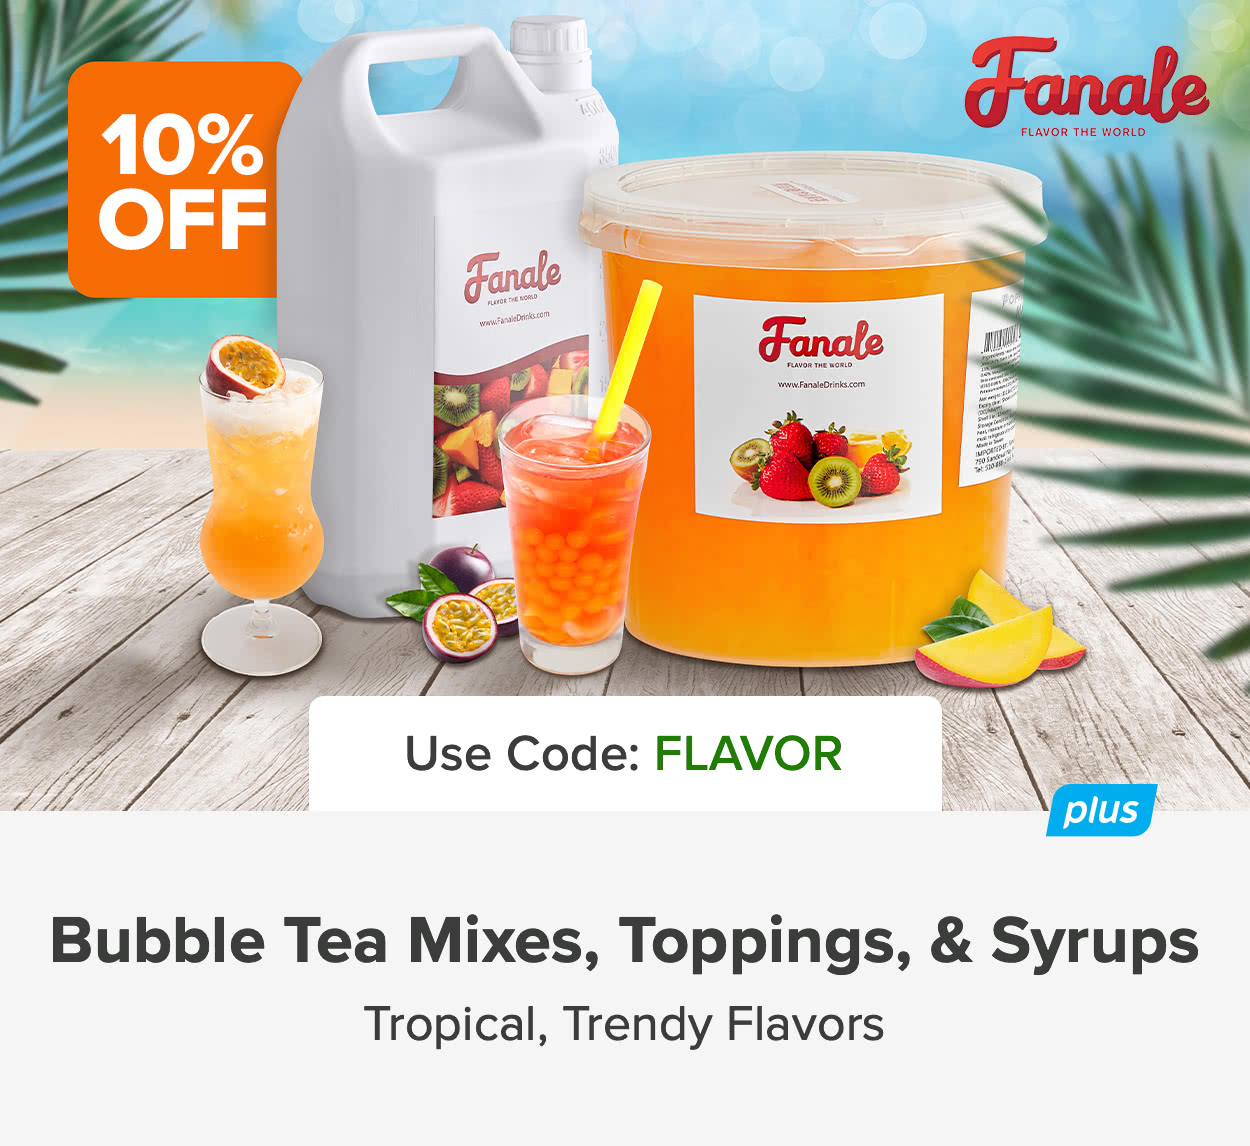 Bubble Tea Mixes, Toppings, & Syrups